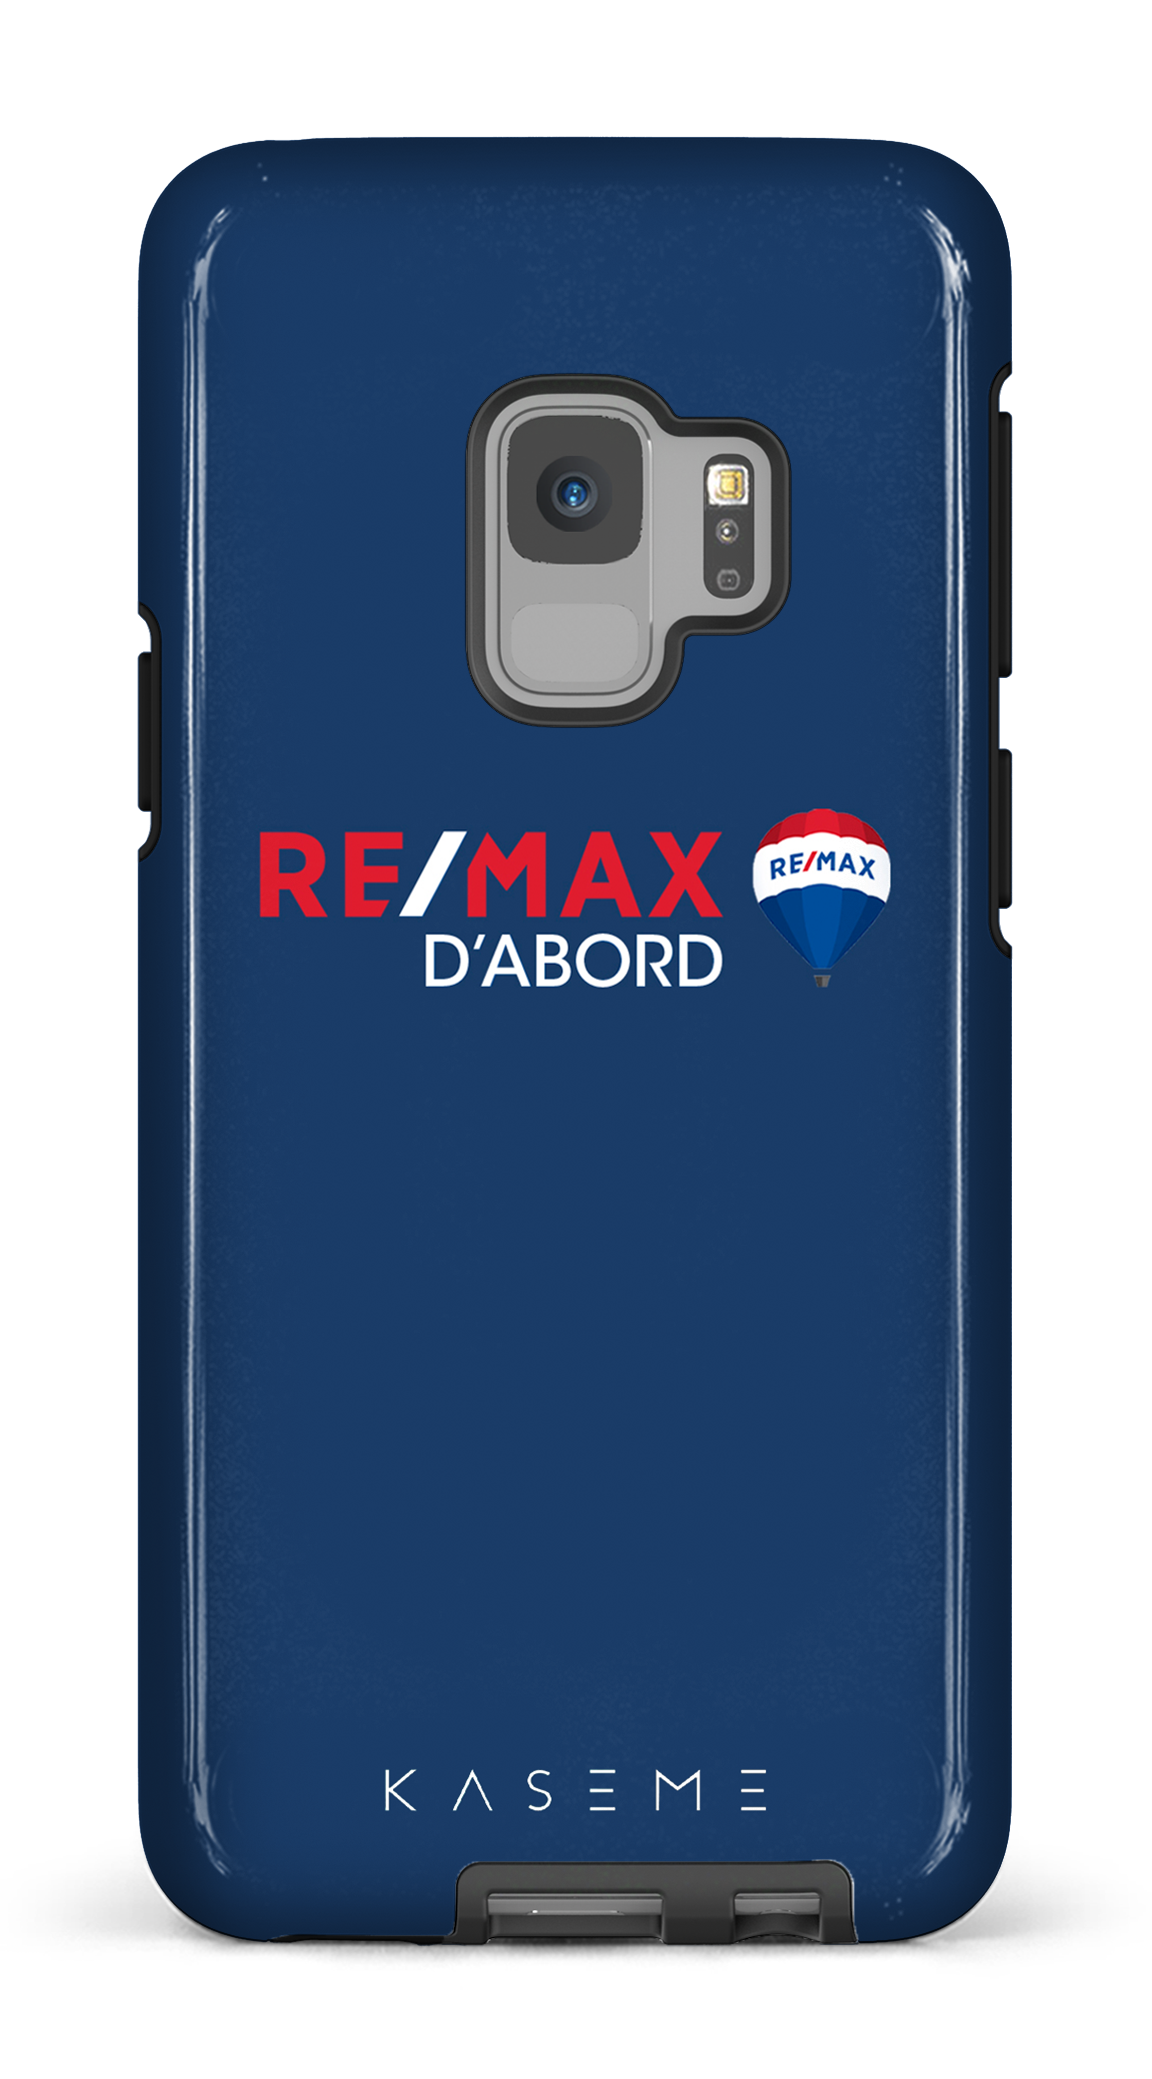 Remax D'abord Bleu - Galaxy S9